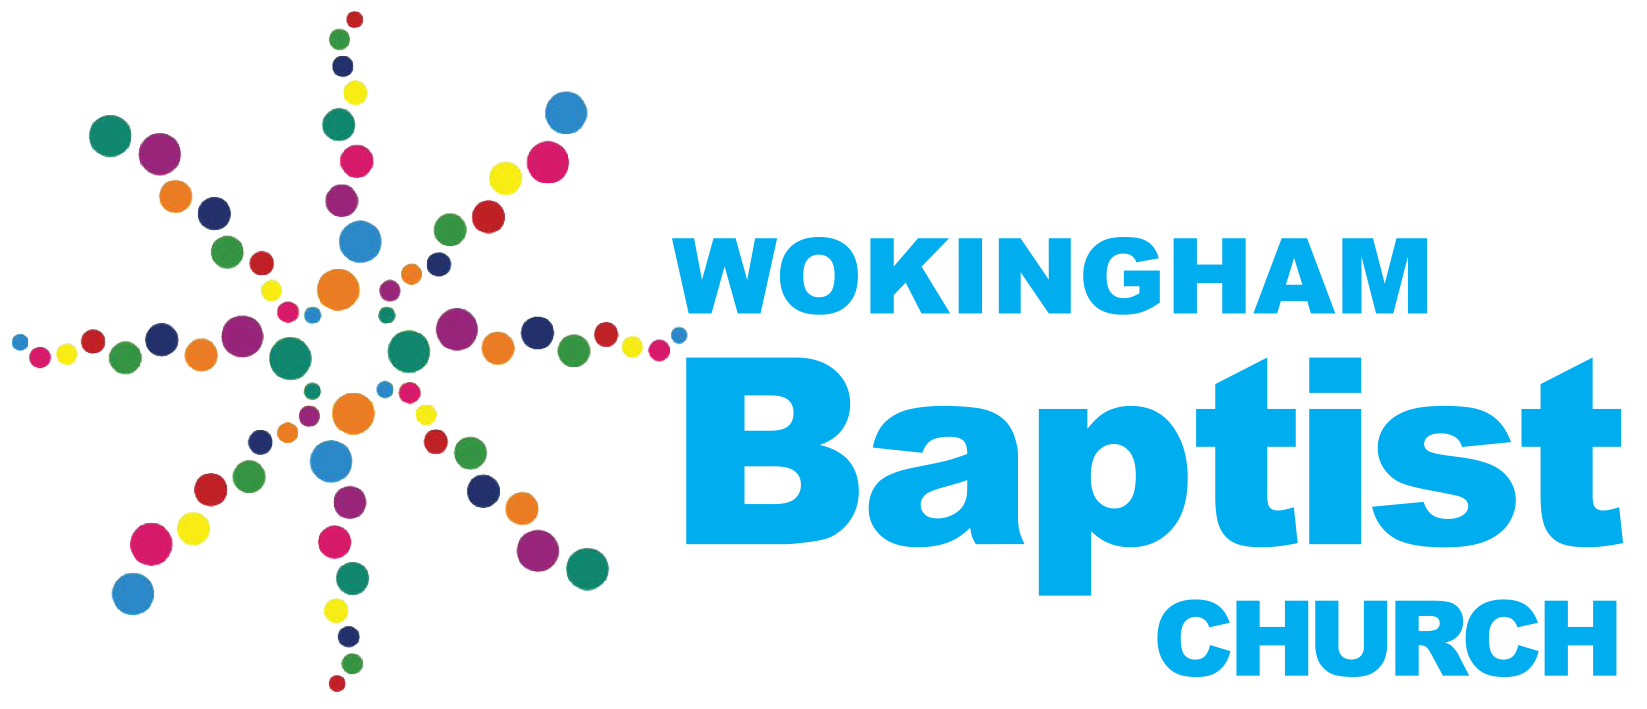 Wokingham Baptist Church footer logo